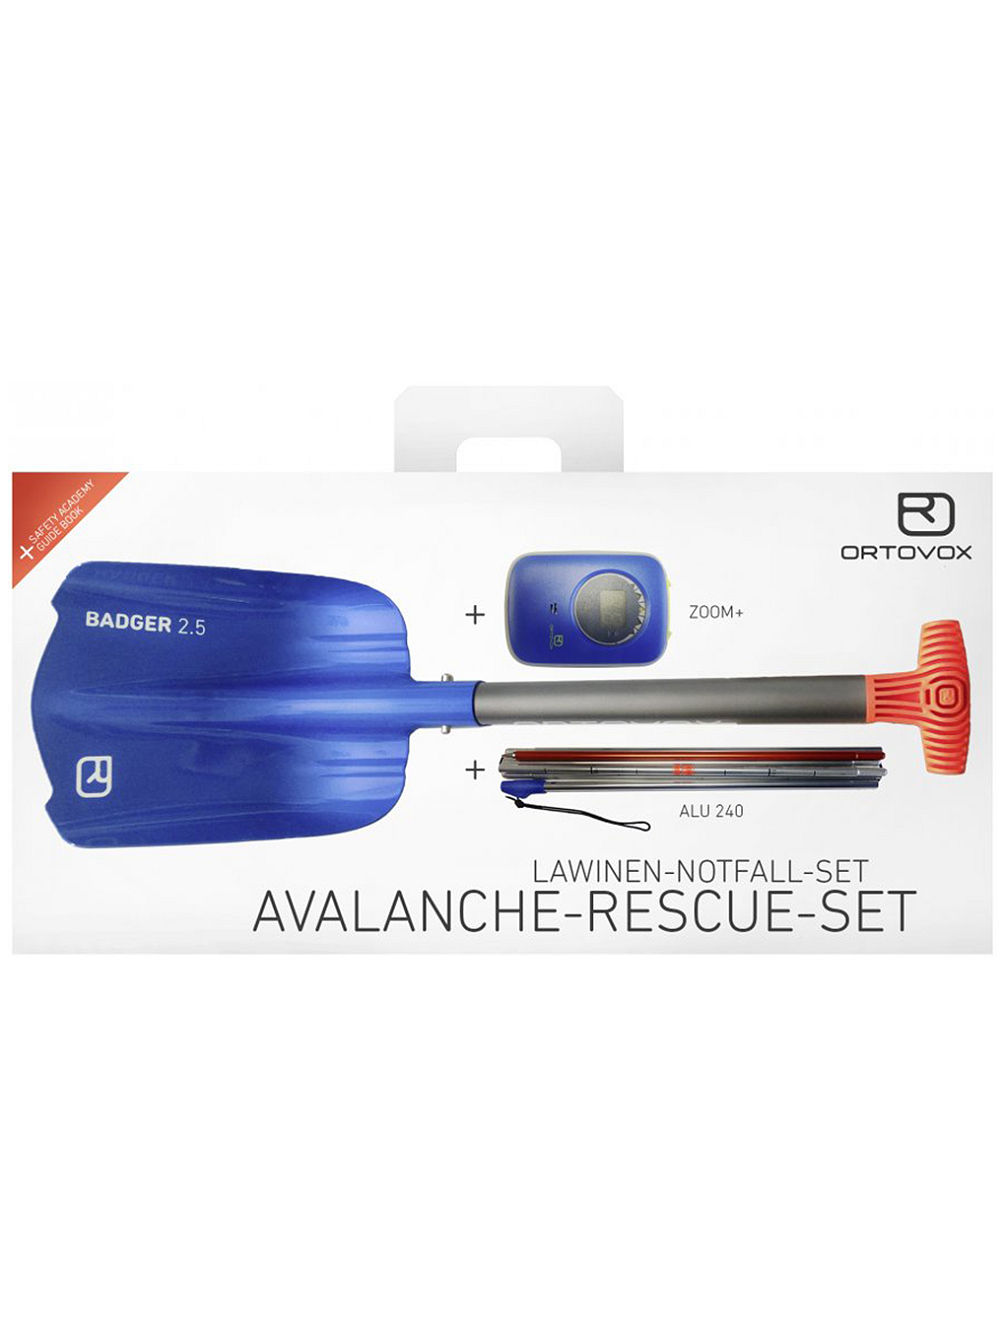 Avalanche Rescue Kit Zoom+ Rescue Set